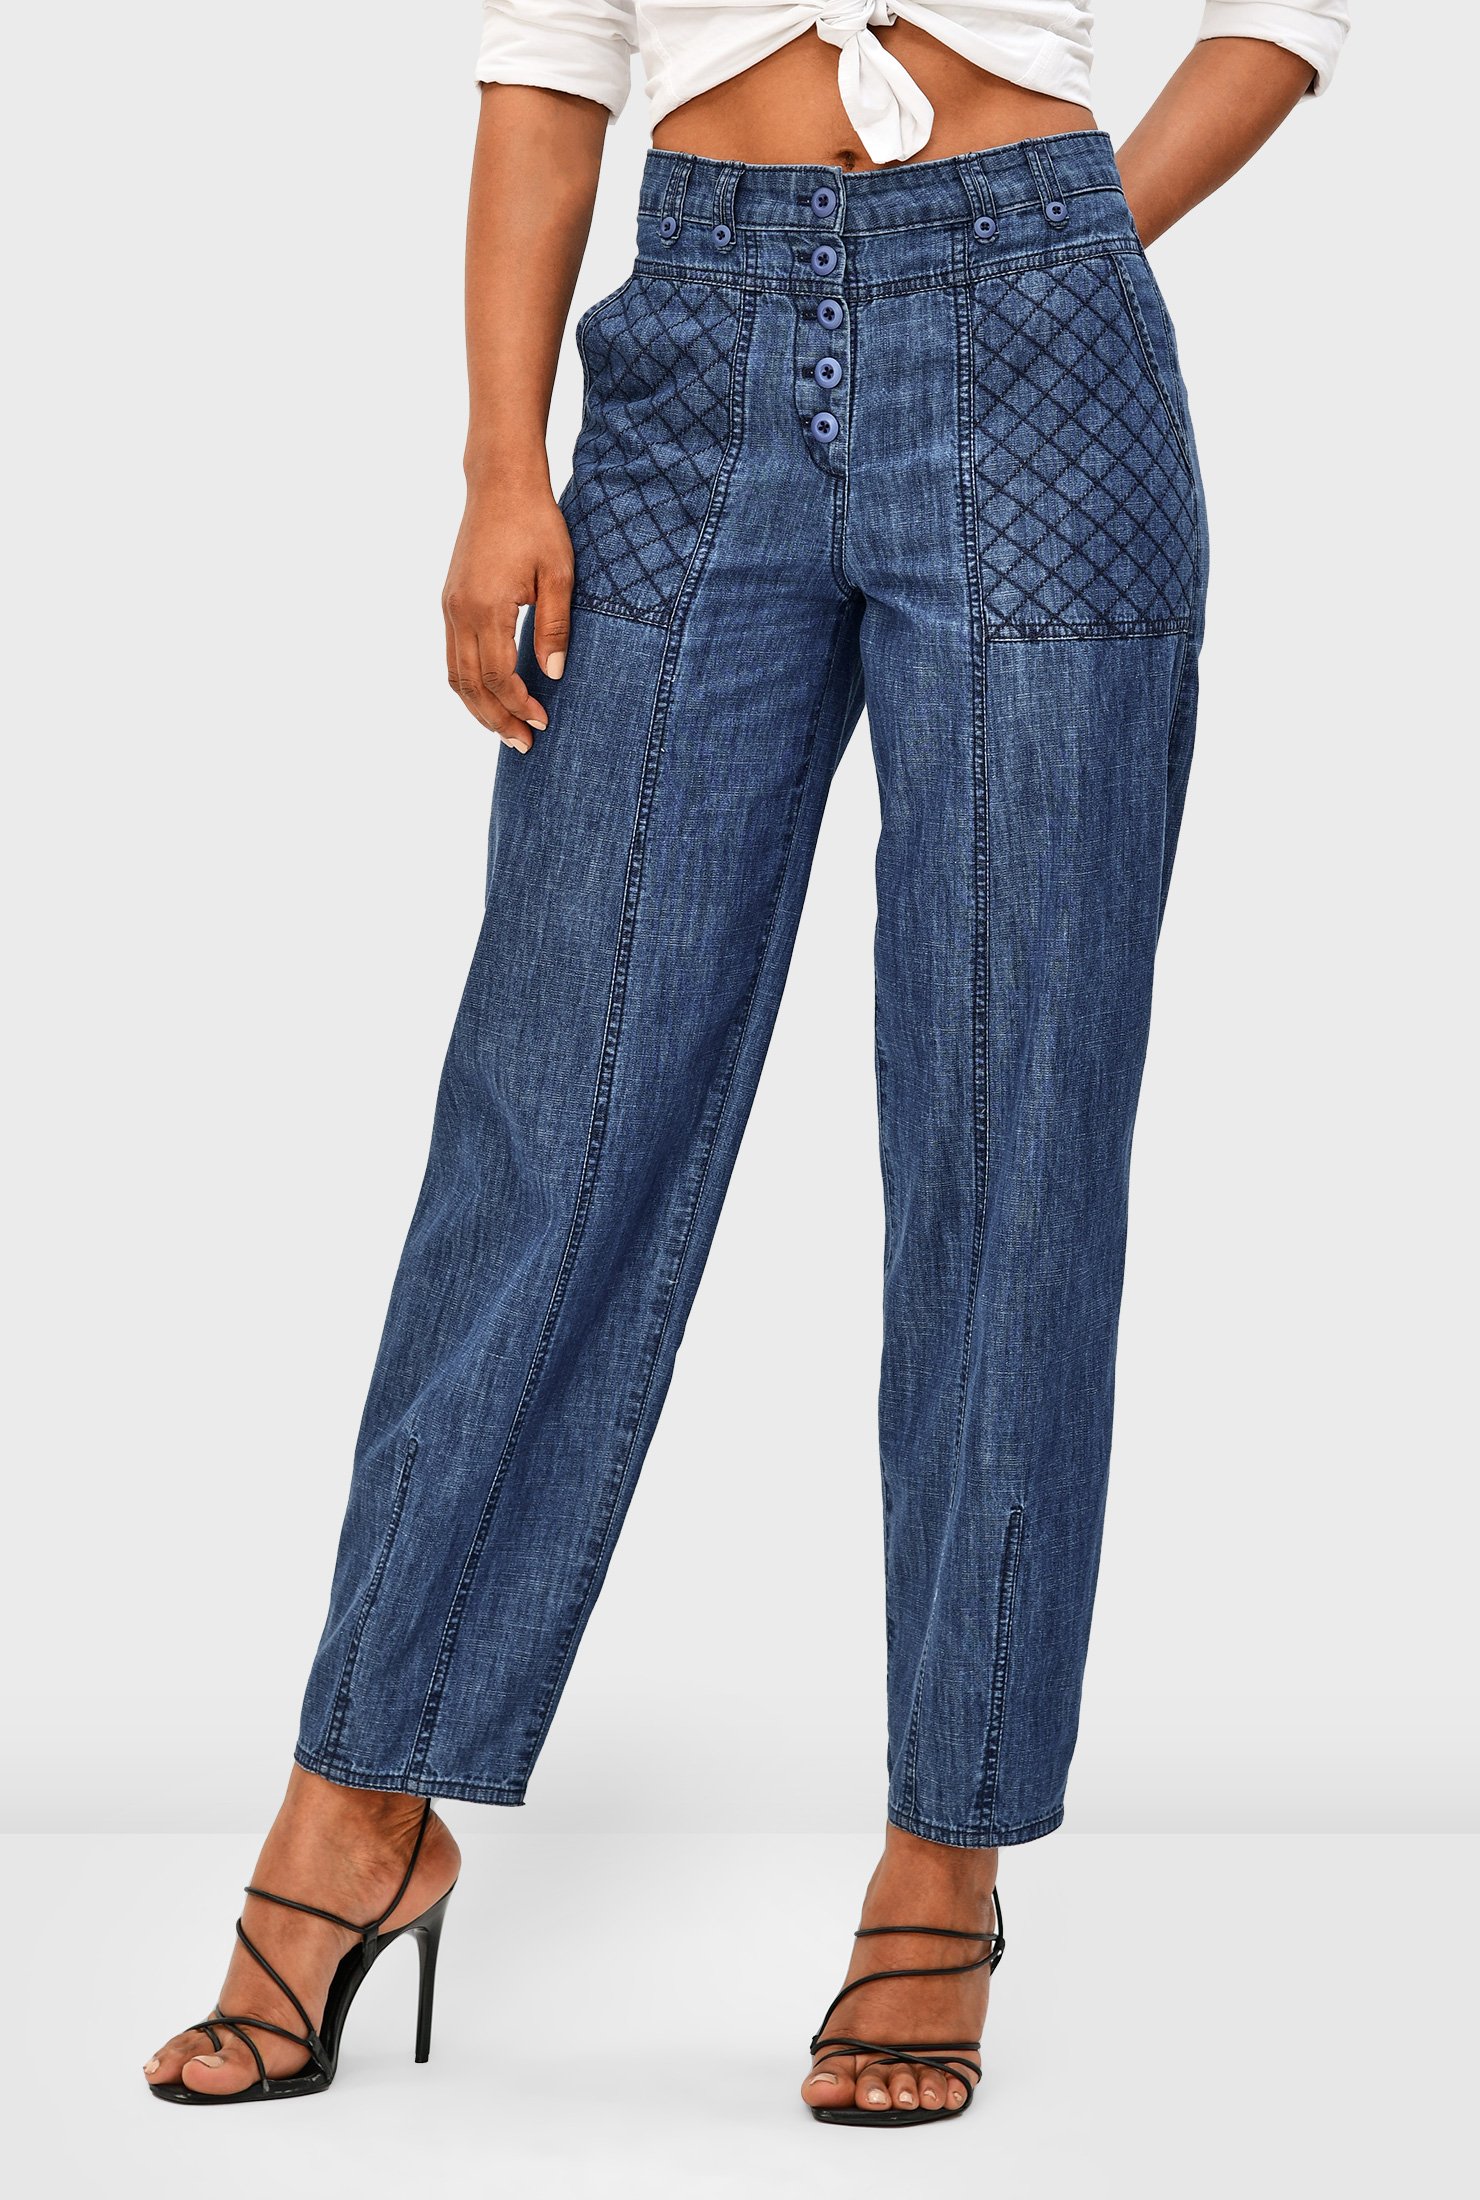 Shop Button fly high jeans eShakti cotton | denim waist